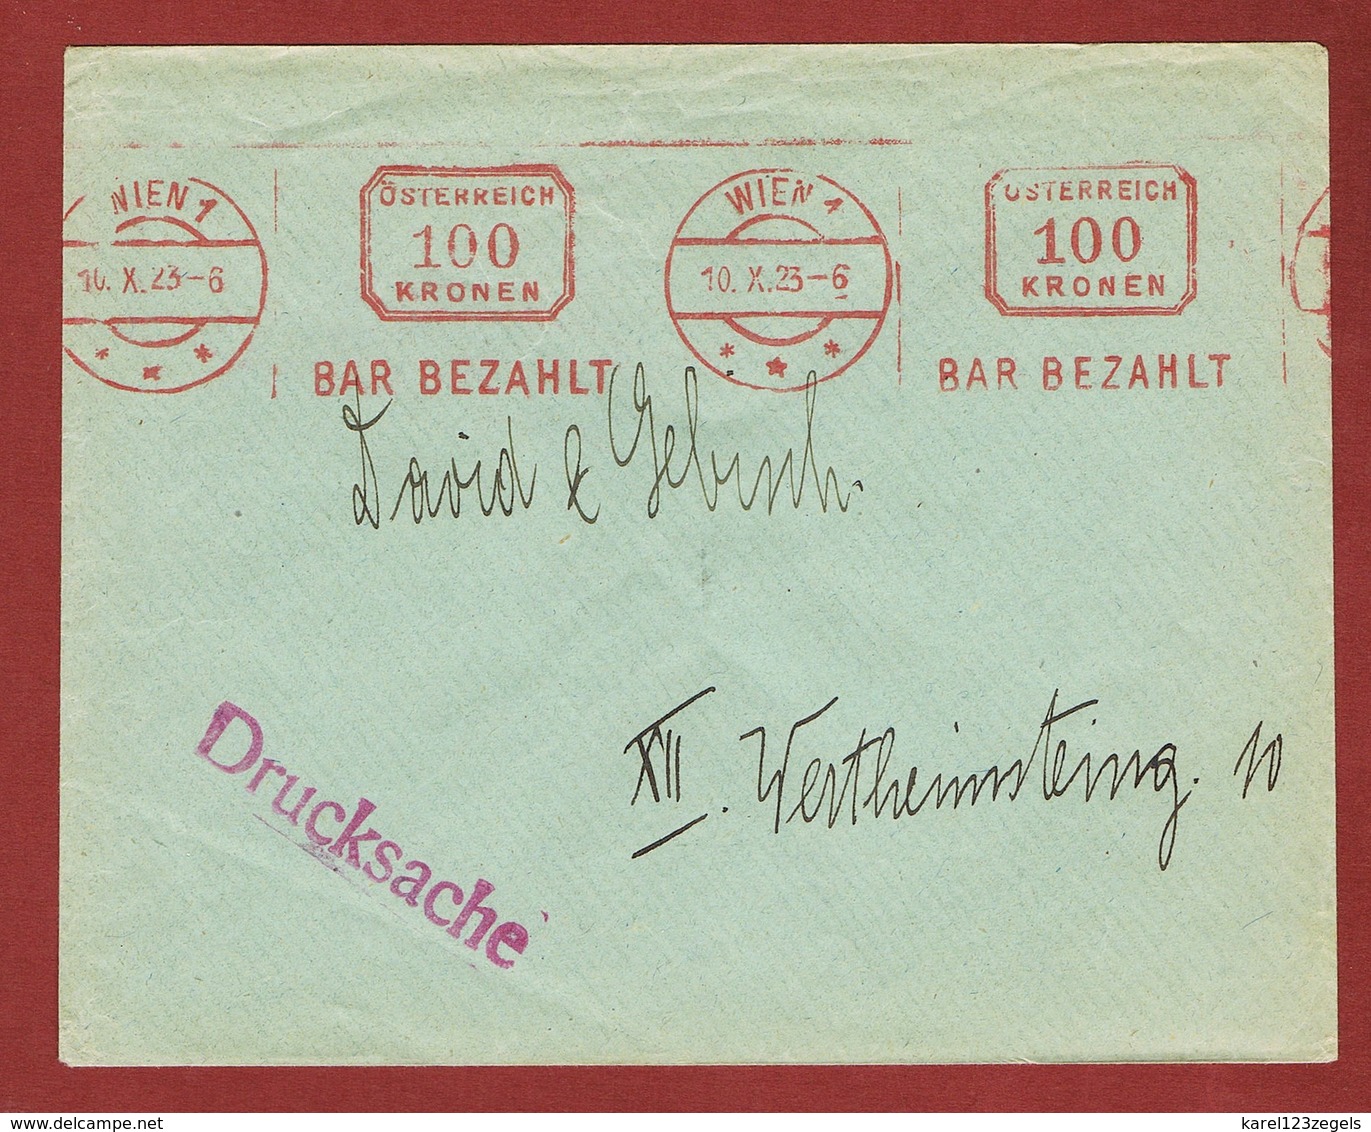 Infla Ab 1. Aug. 1923 Drucksache 100 Kr  Freistempel Bar Bezahlt - Covers & Documents